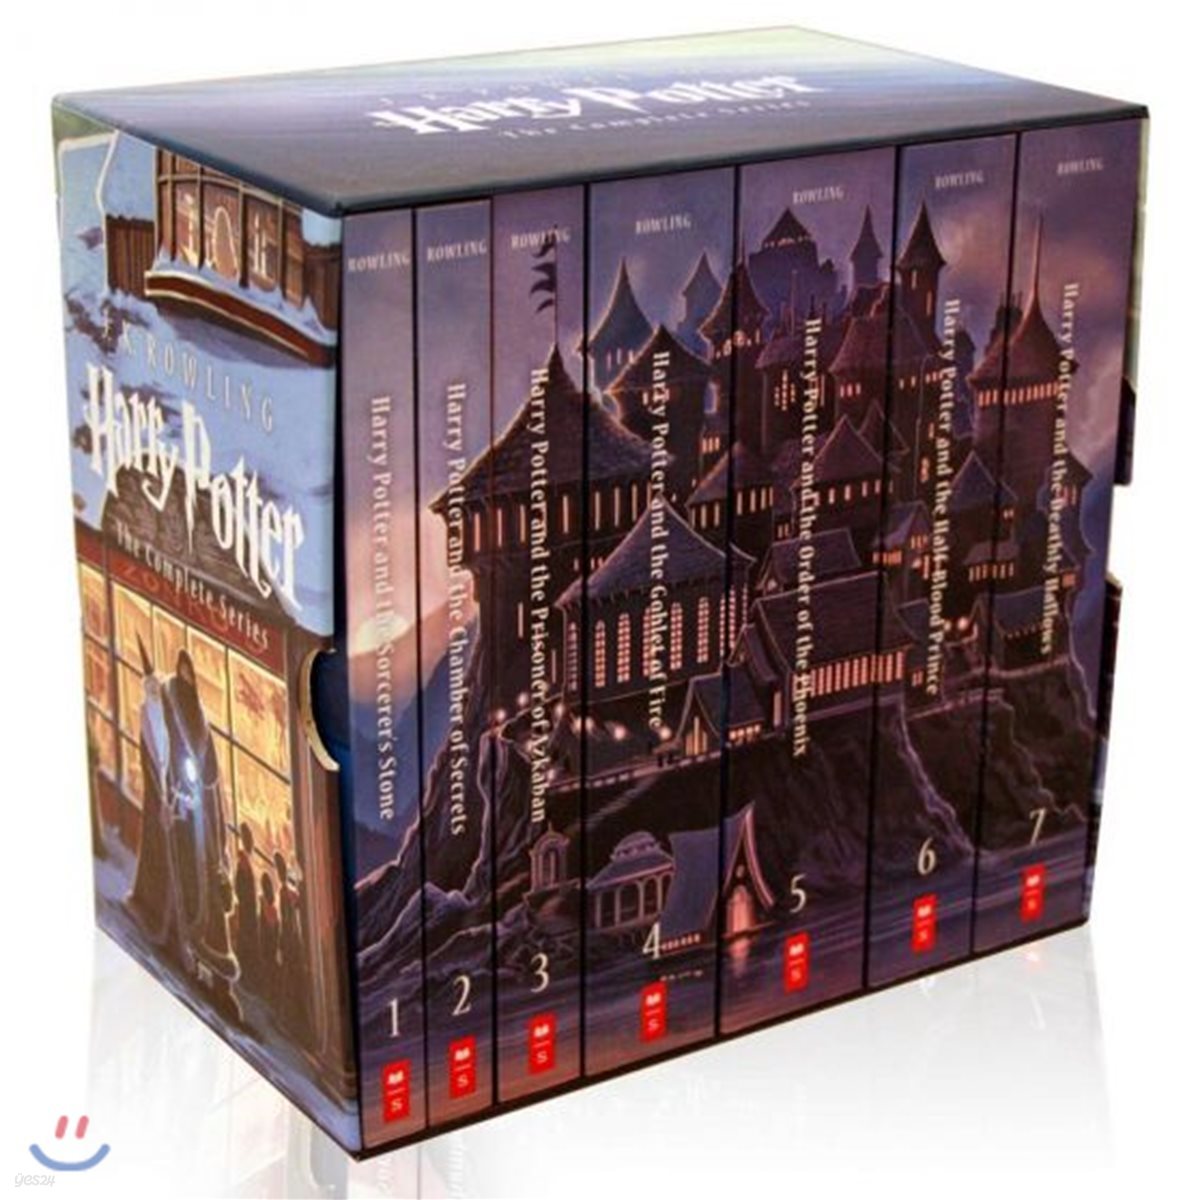 Special Edition Harry Potter Paperback Box Set: 1-7 해리포터 원서 페이퍼백 7권 박스 세트 (미국판 / 15주년 기념 스페셜 에디션)